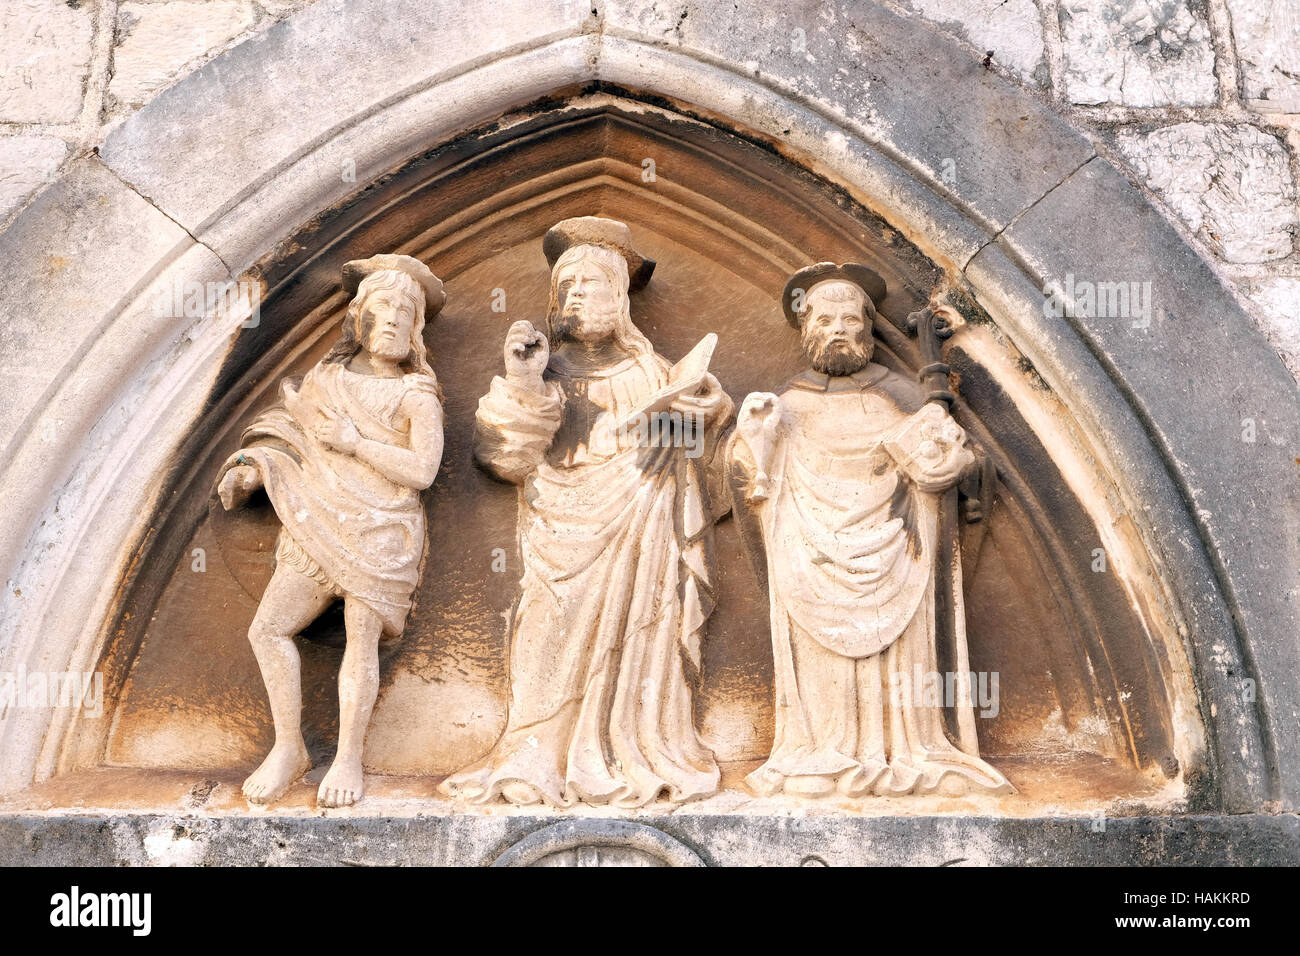 Jesus Christ, St. John the Baptist and St. Nicholas with a stick, portal of Saint Luke Church in Dubrovnik, Croatia Stock Photo